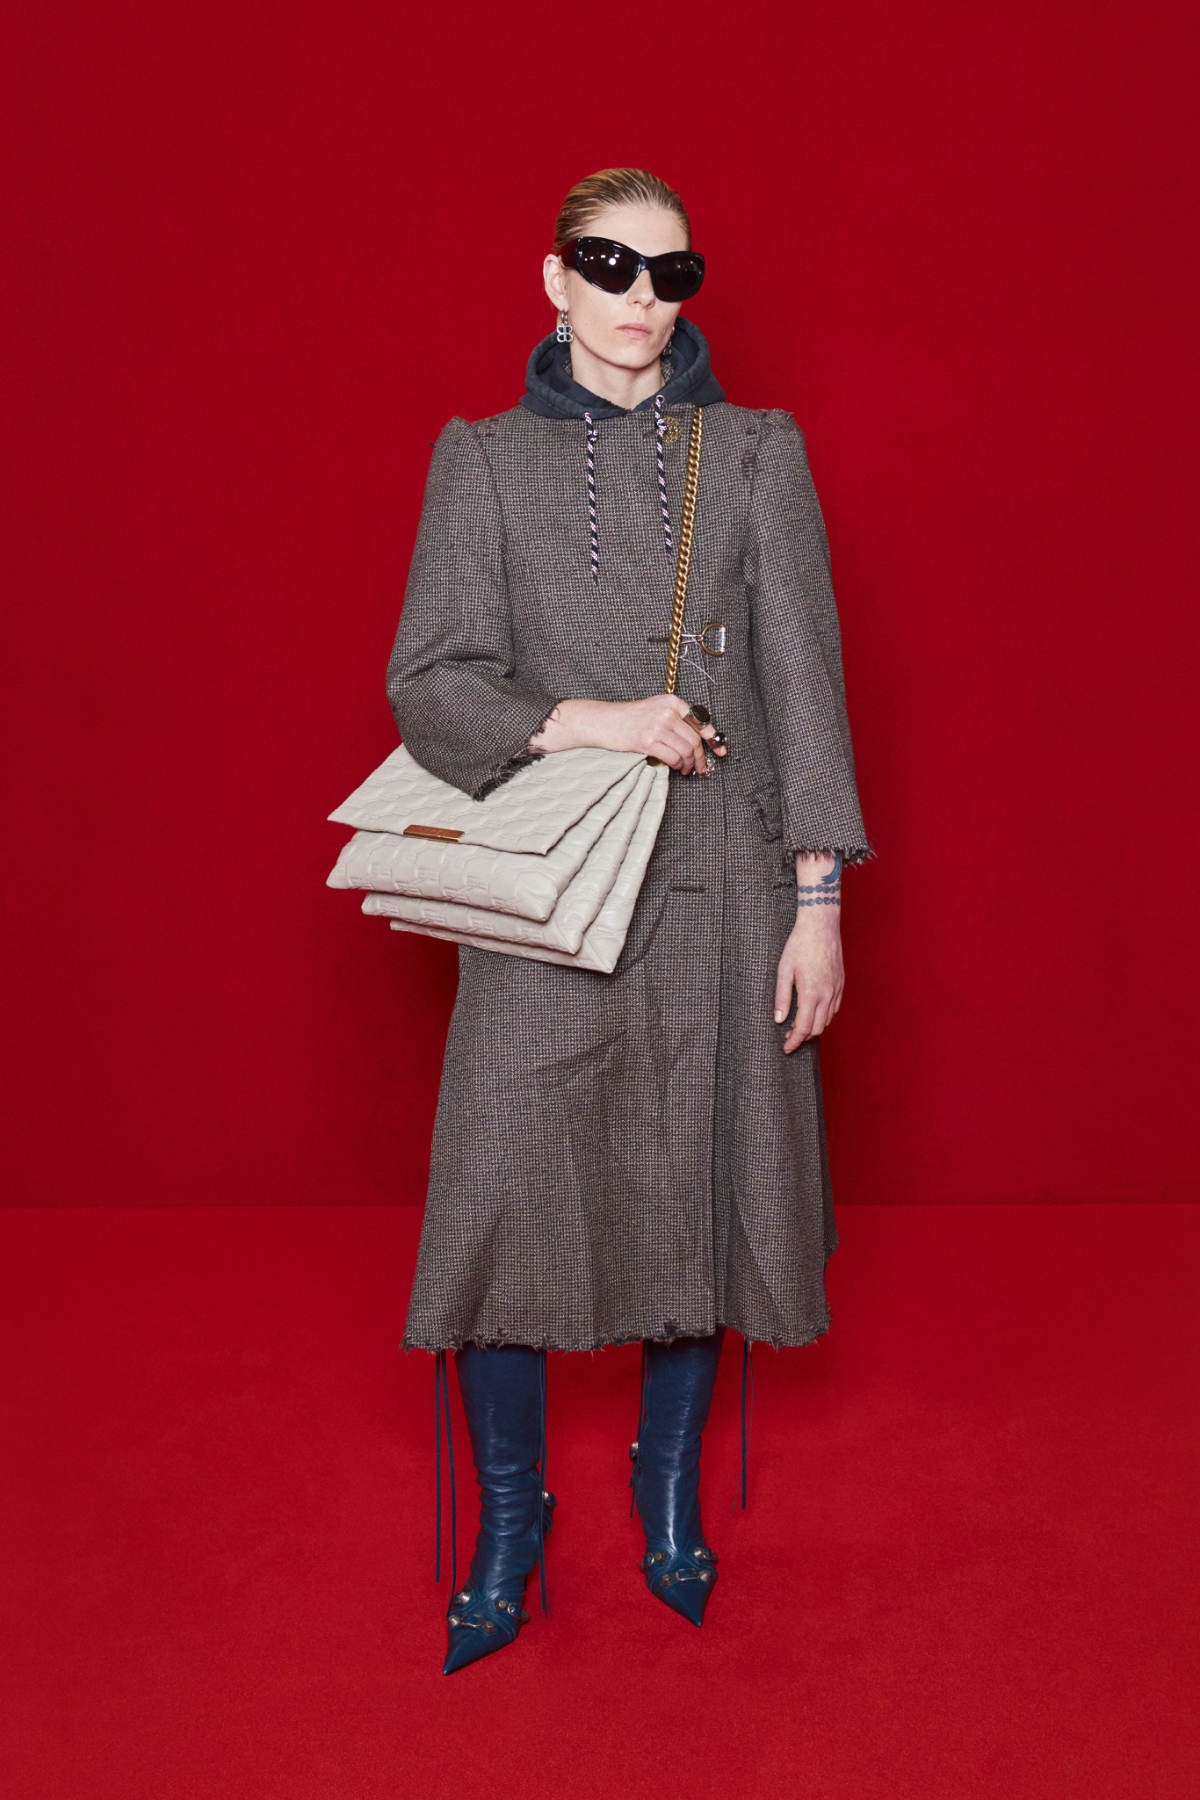 Balenciaga Presents Its New Summer 22 Red Carpet Collection